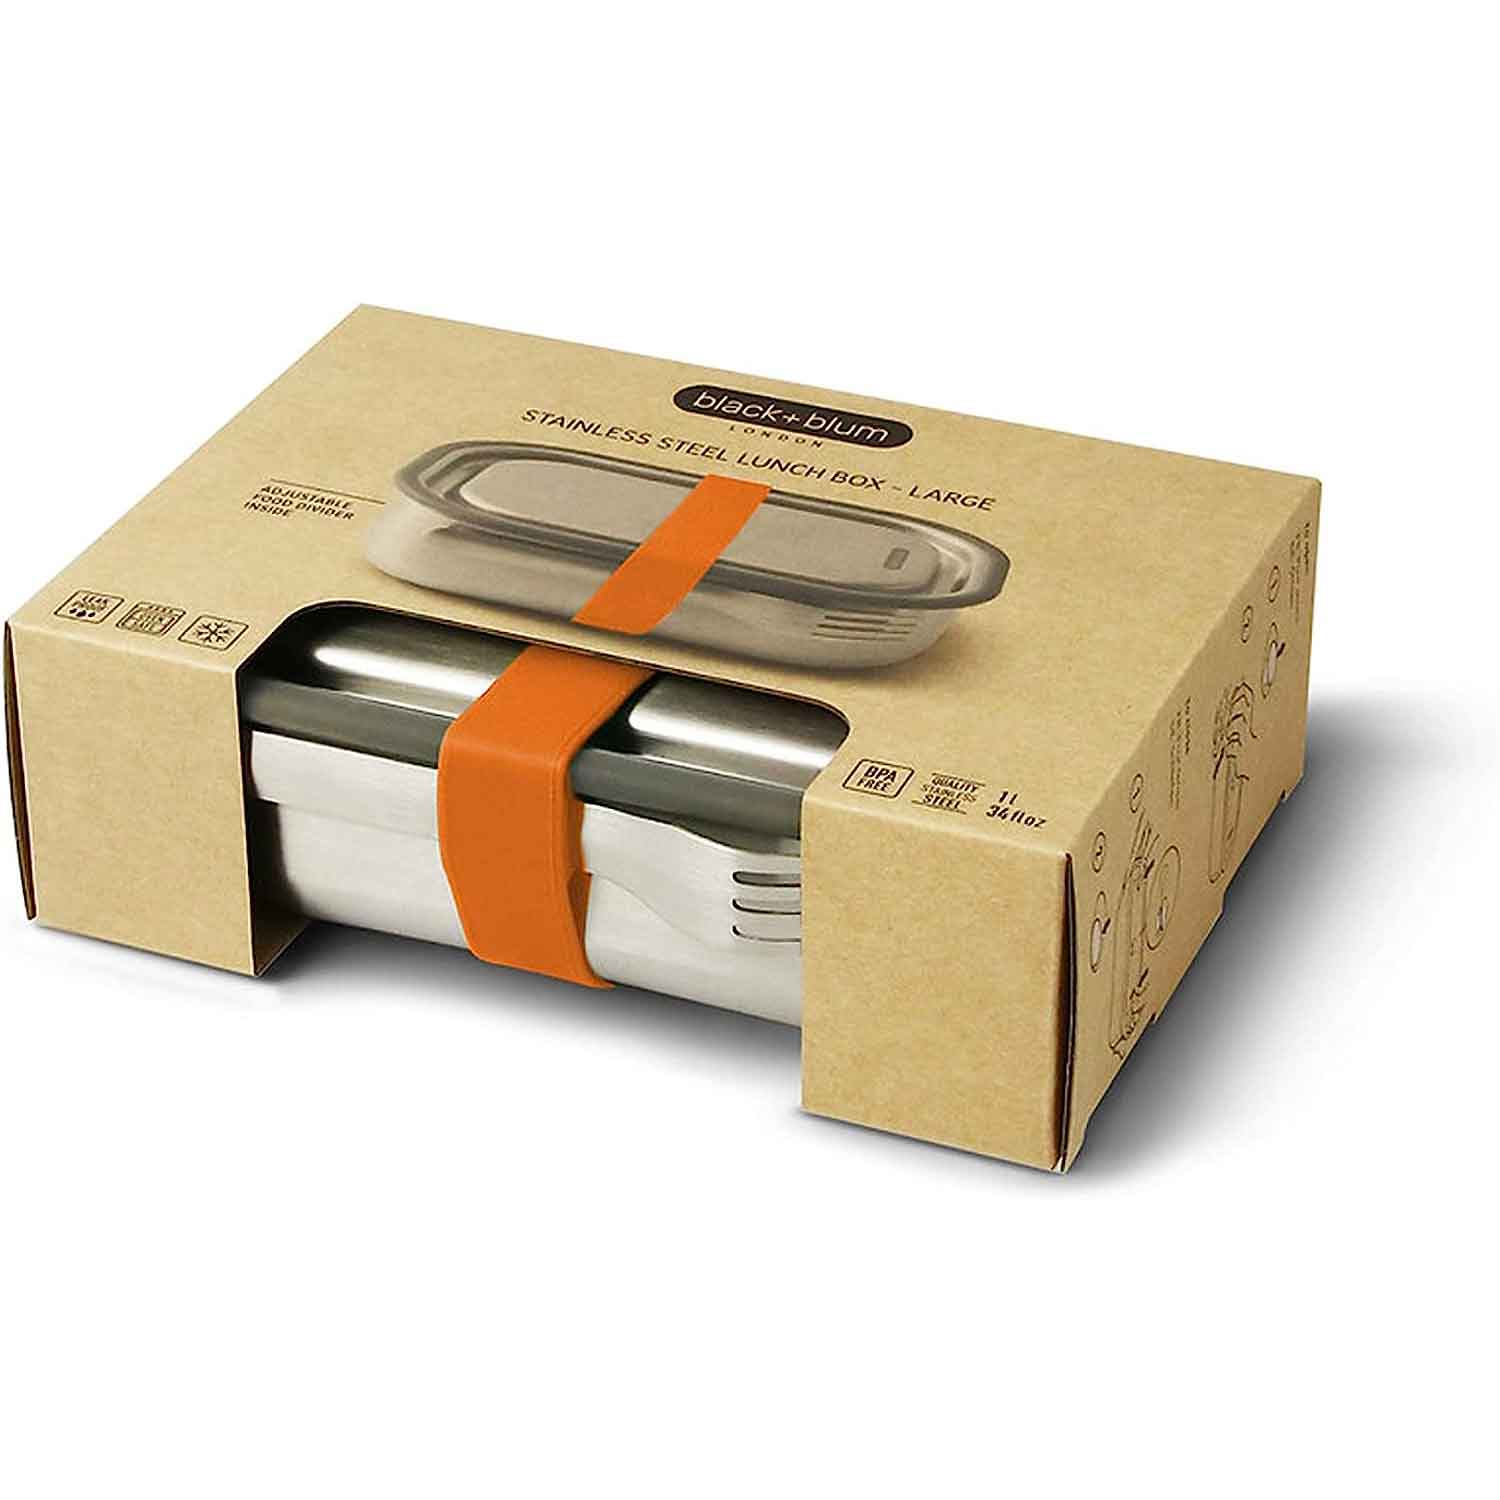 Lunchbox-Edelstahl-orange-von-Black+Blum-berlindeluxe-brotbo-orange-band-verpackung